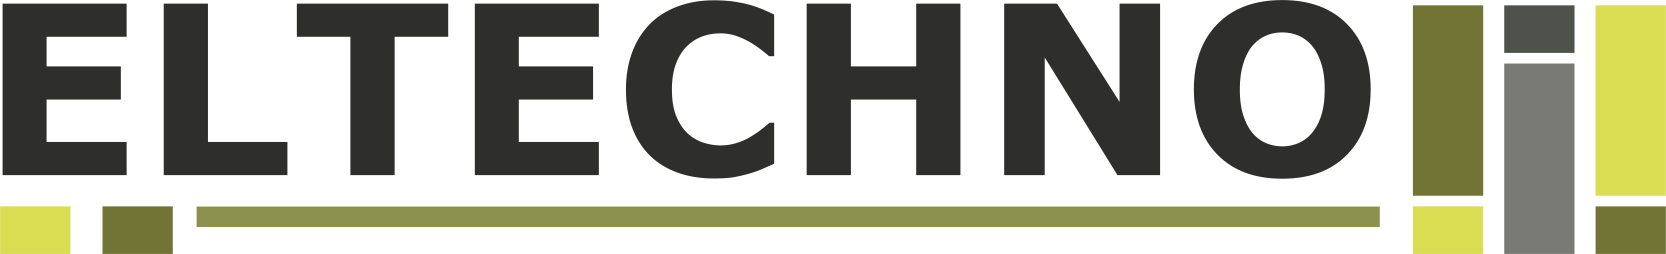 Eltecho logo